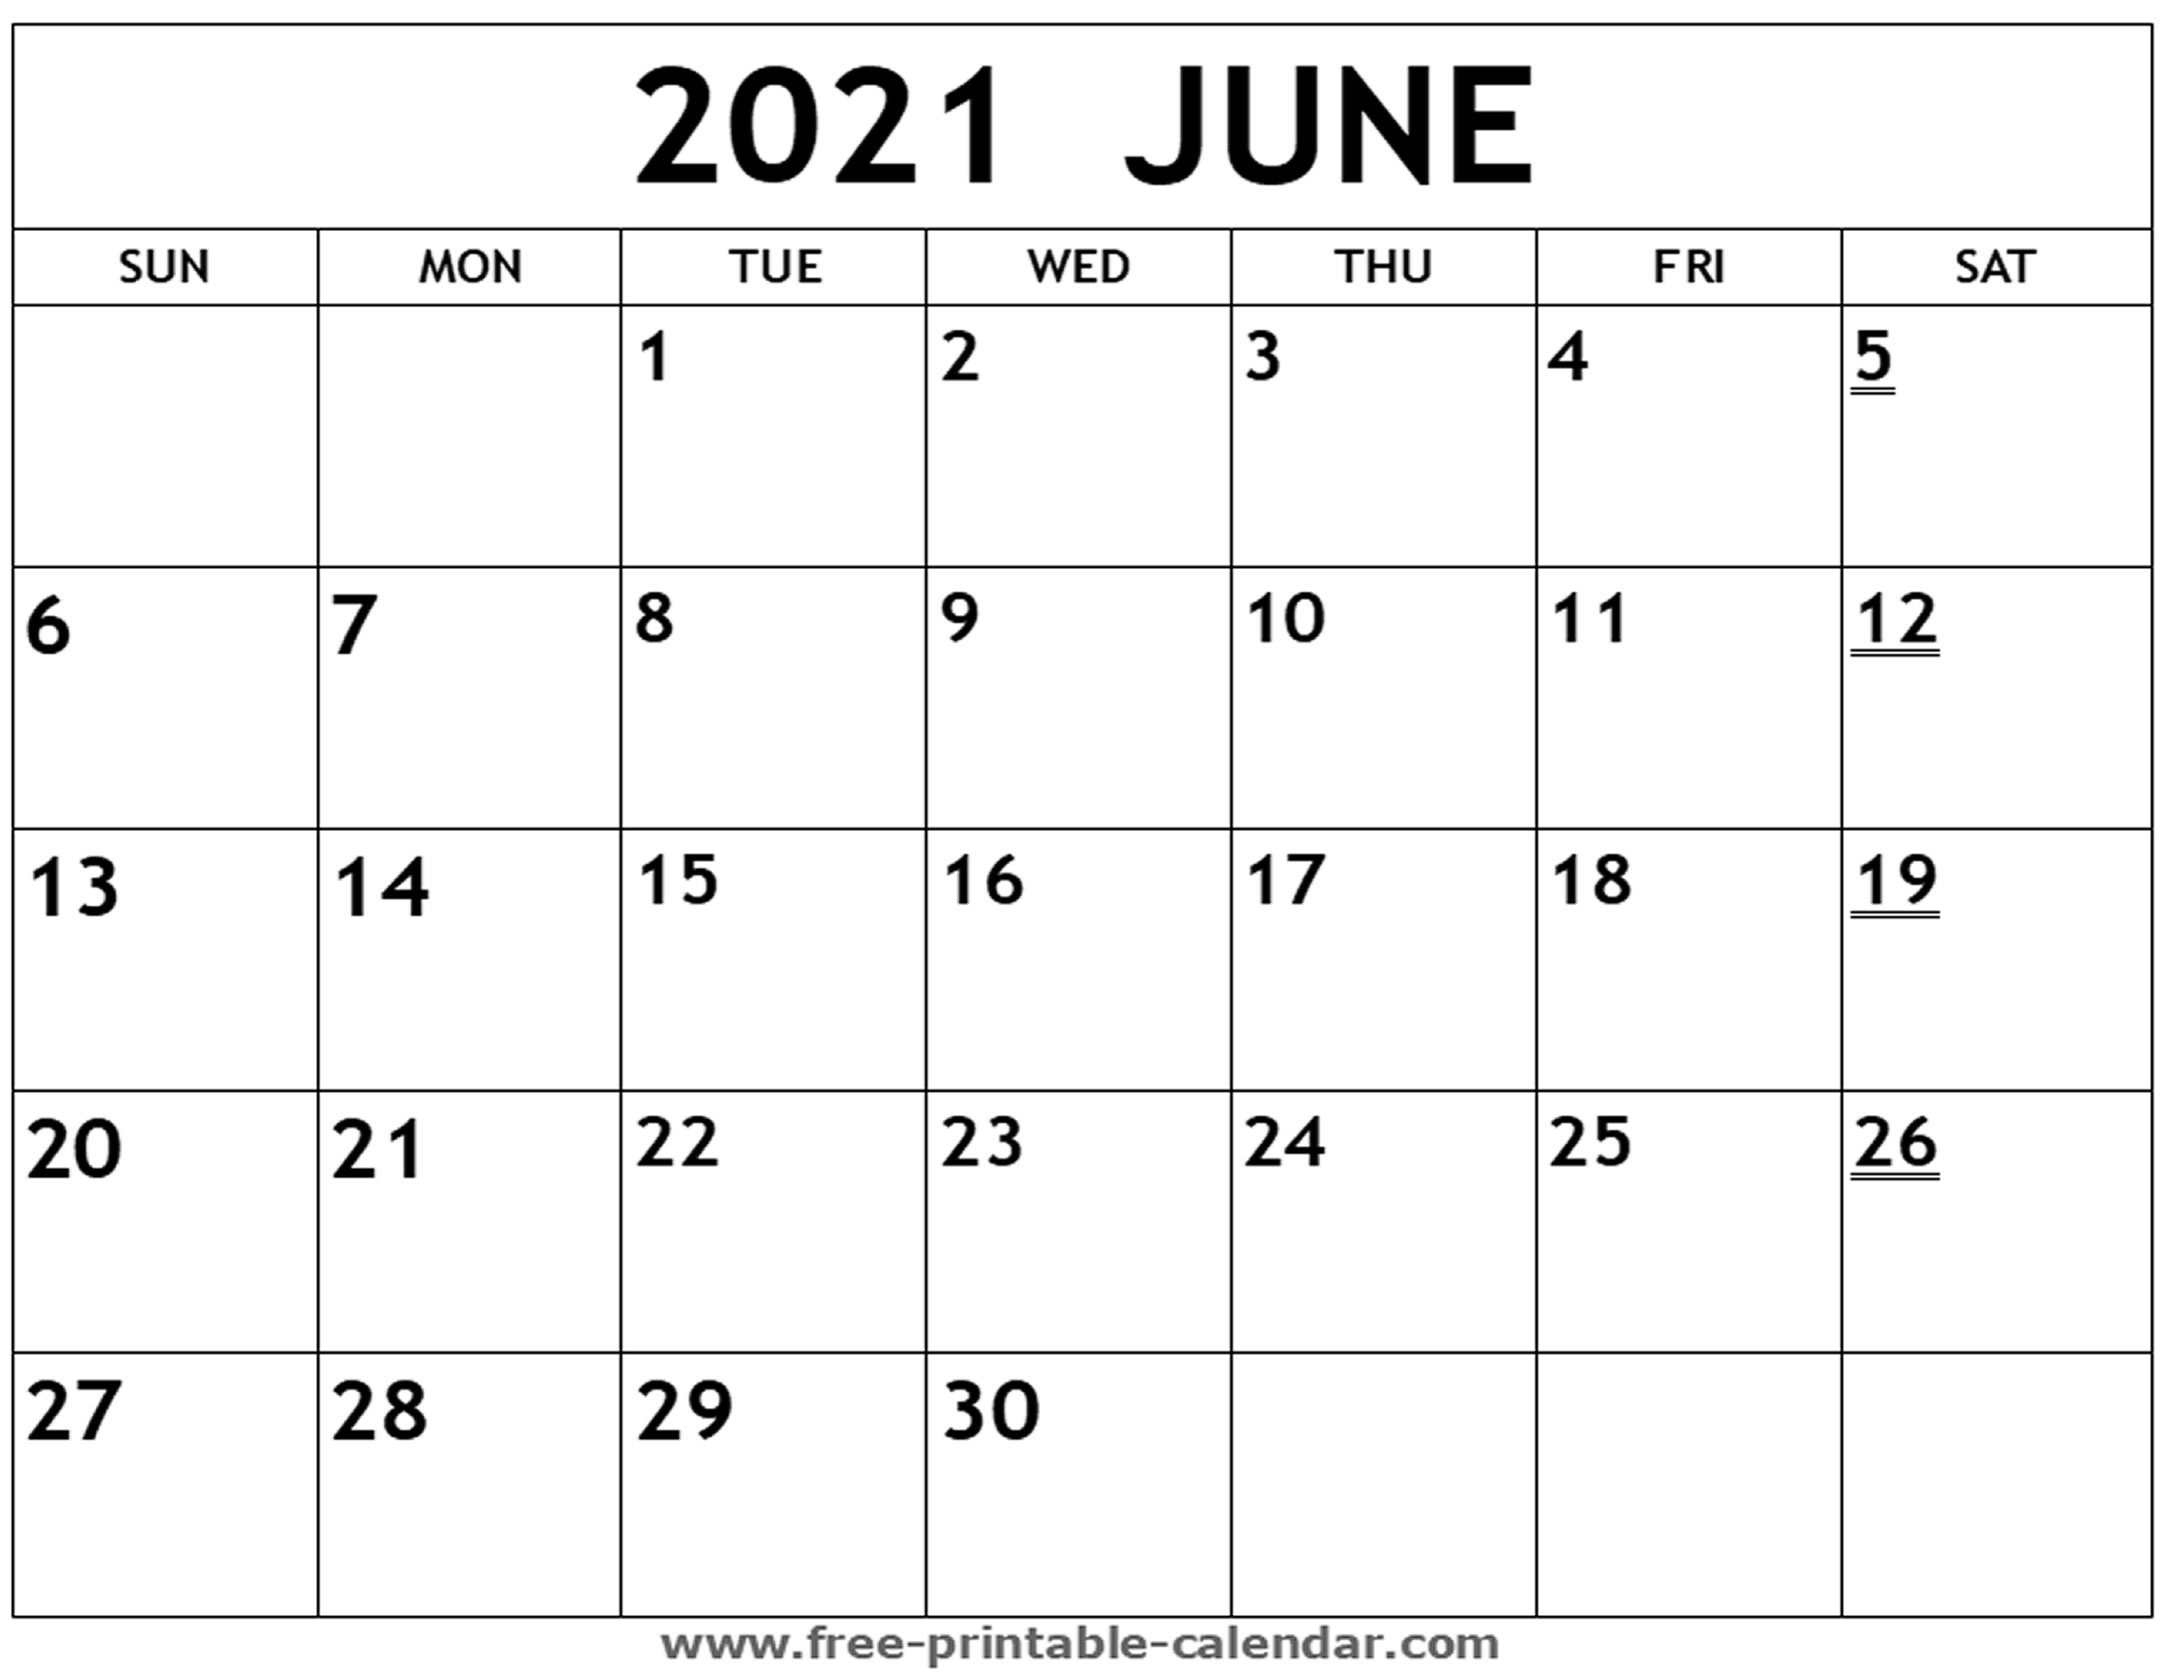 Printable 2021 June Calendar - Free-Printable-Calendar June 2021 Printable Monthly Calendar With Lines